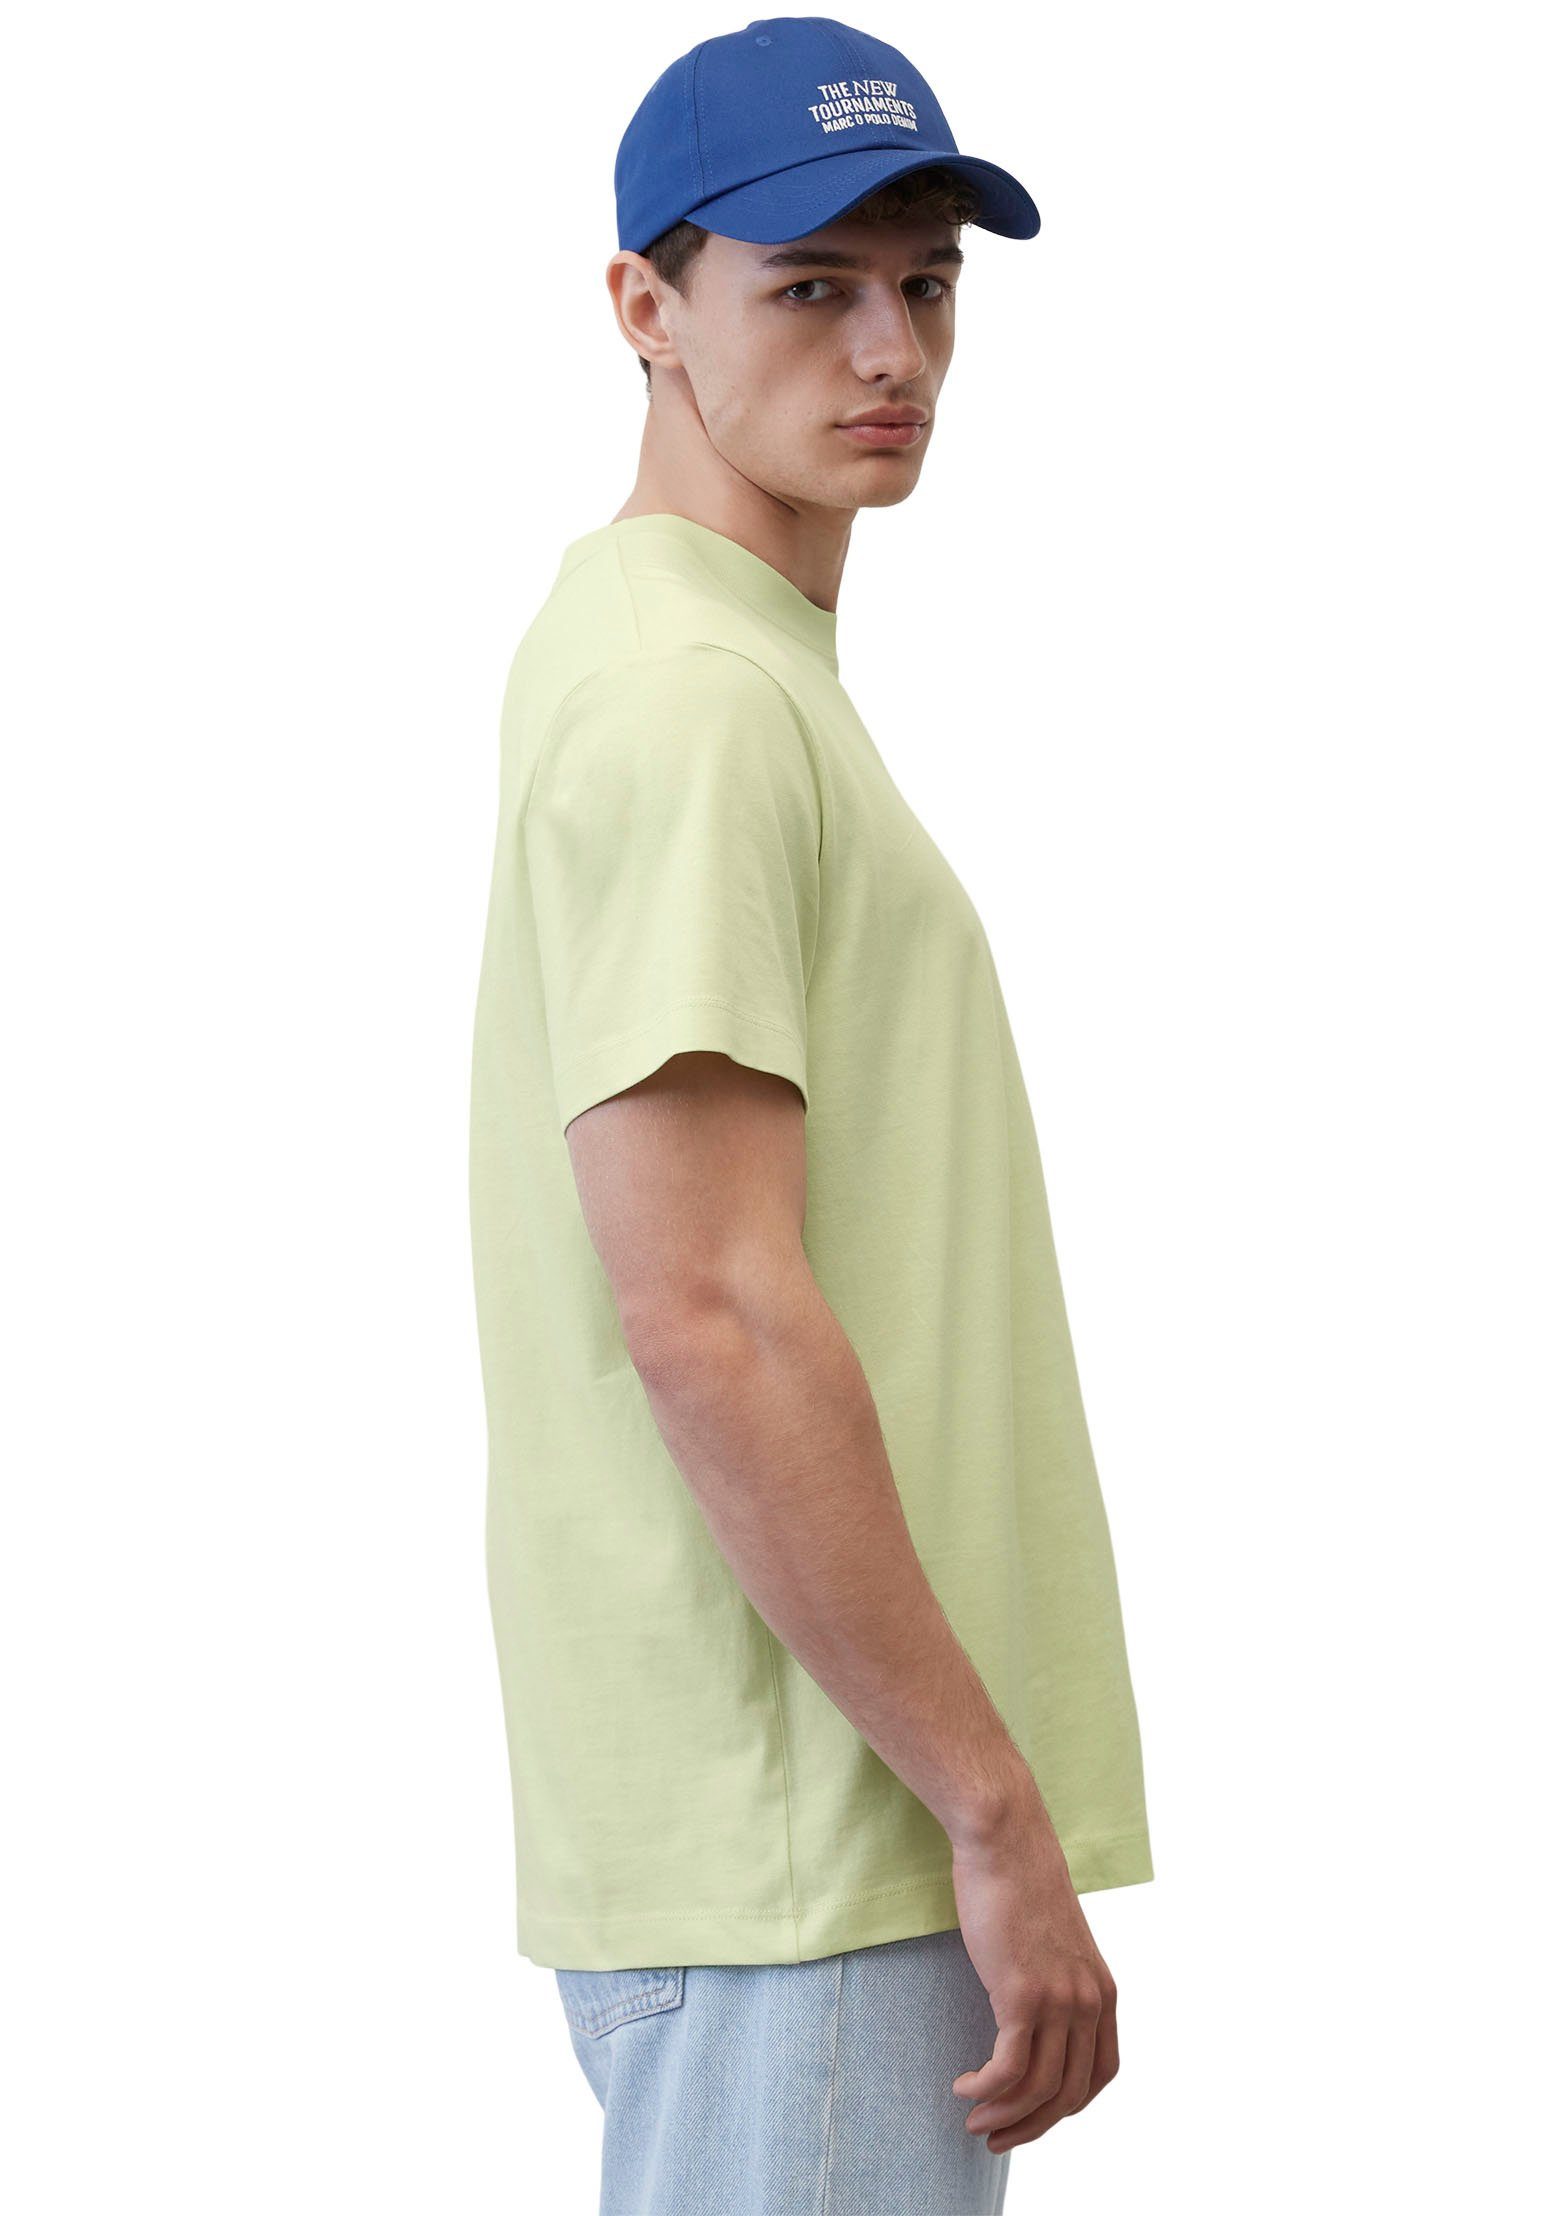 O'Polo Marc DENIM kleinem Logo-Druck lime T-Shirt mit